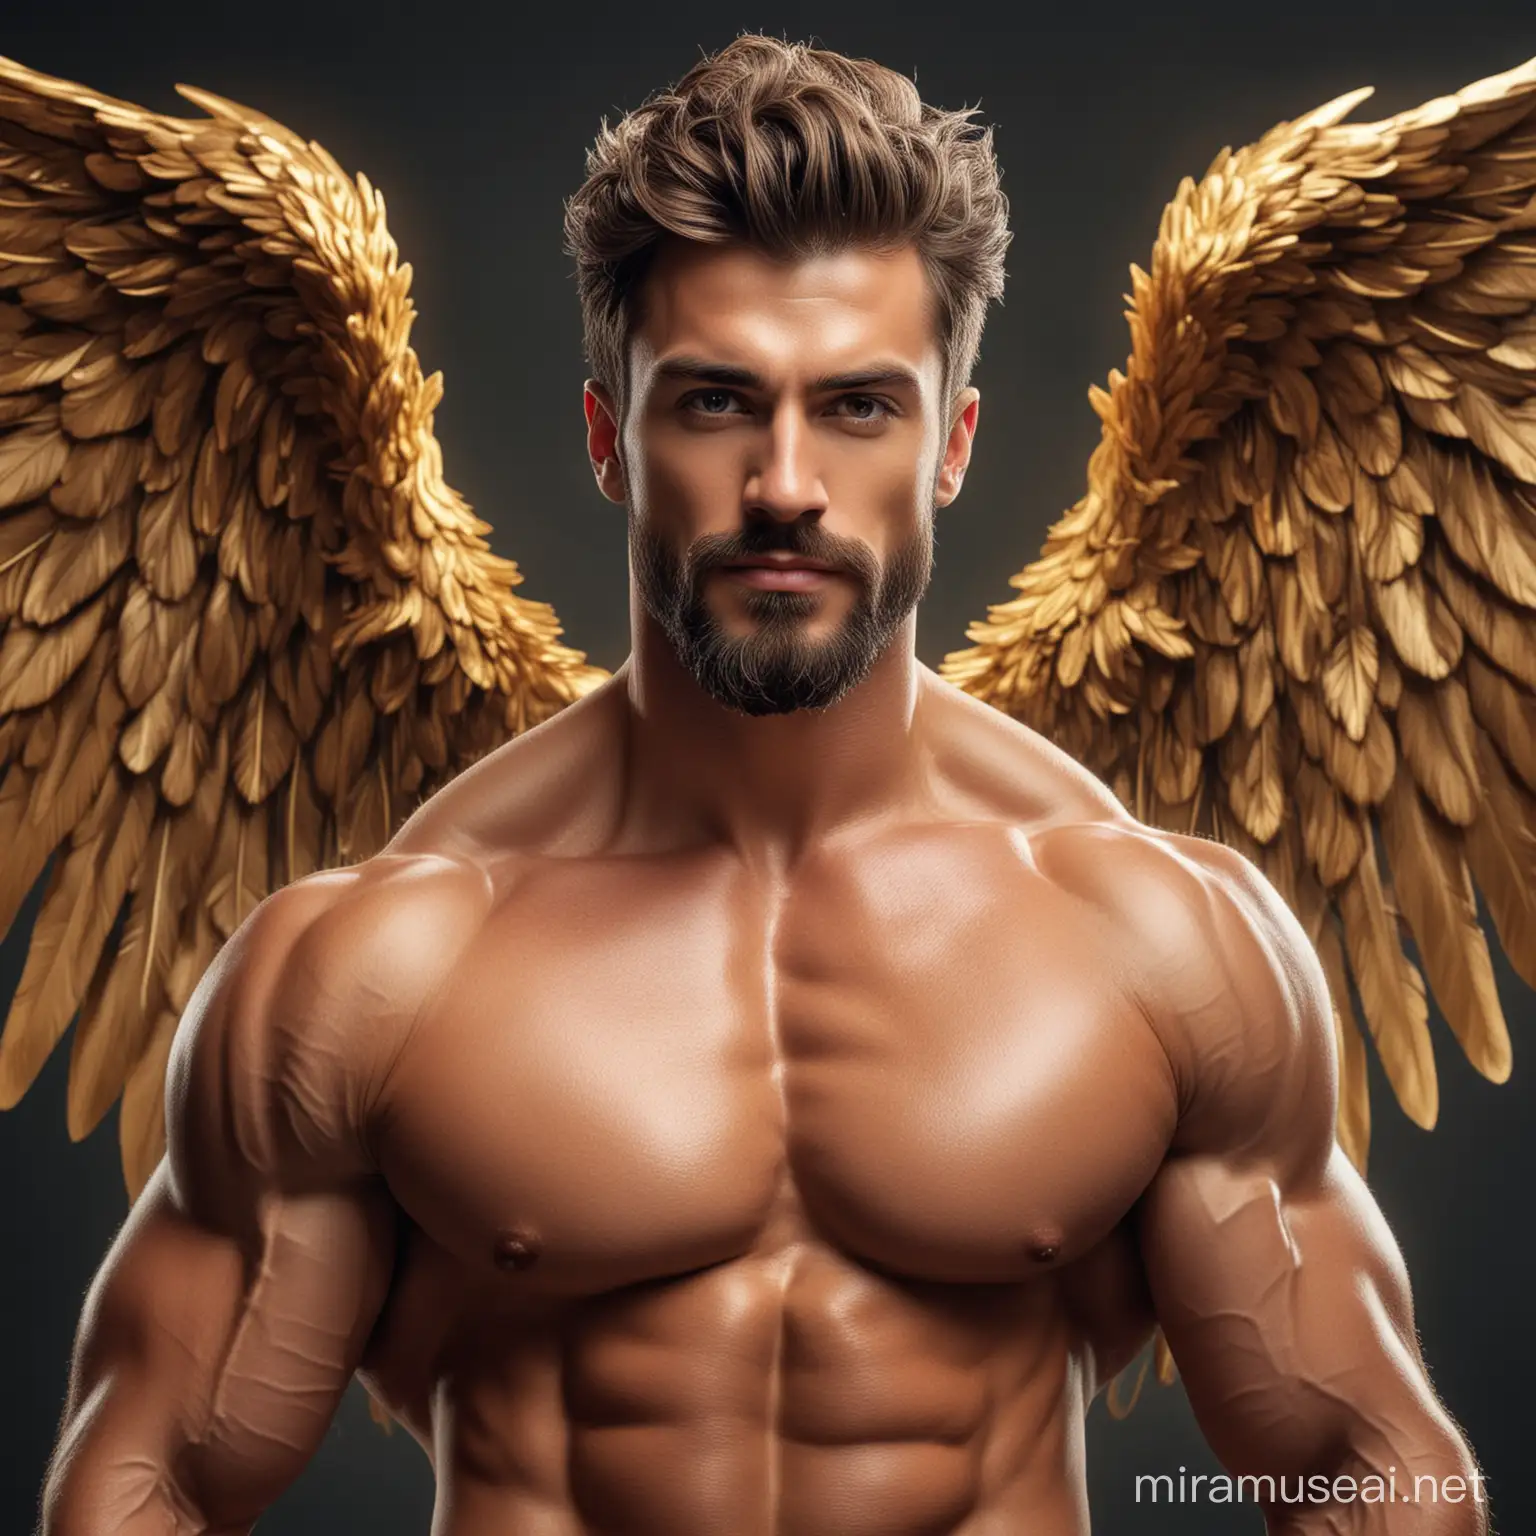 Muscular Bodybuilder Men with Golden Wings Soaring in the Sky